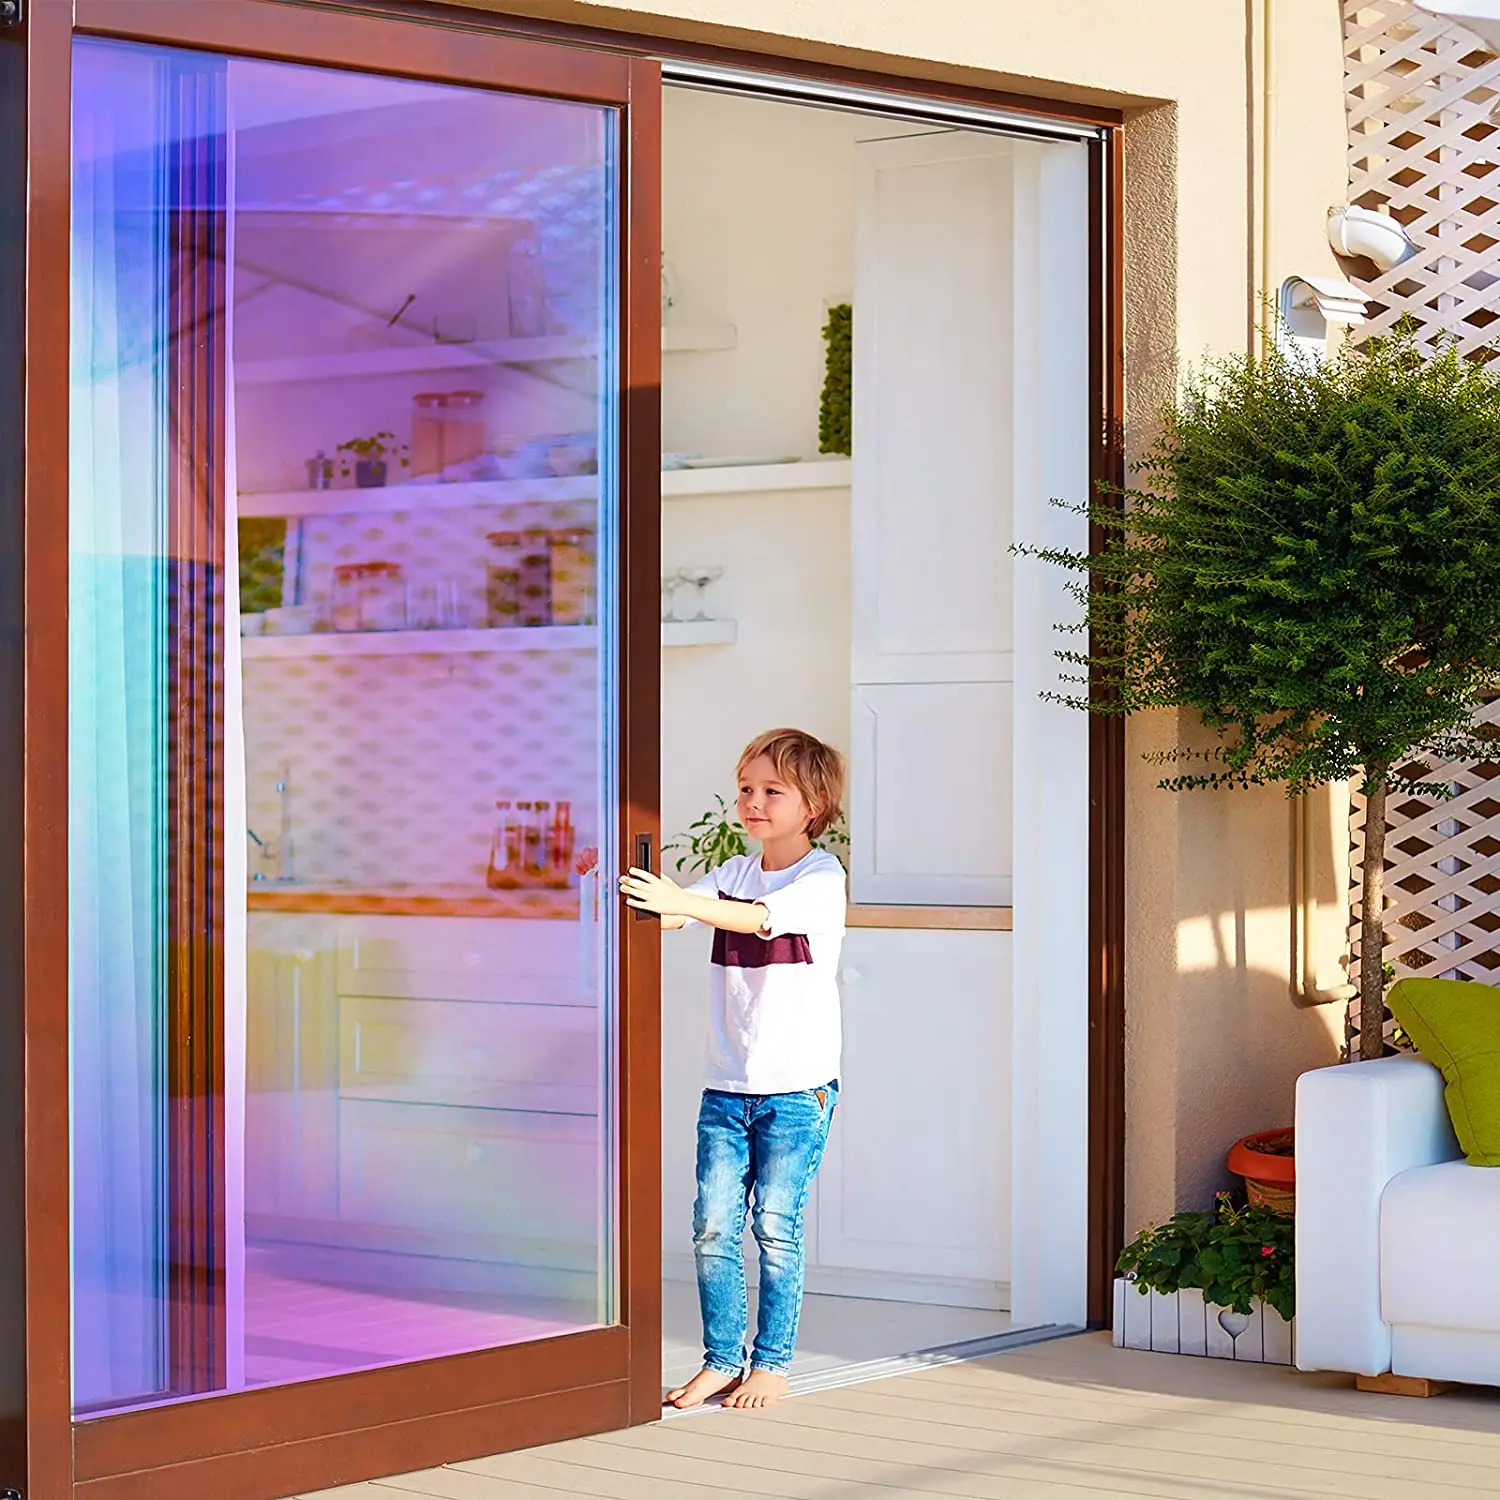 Details about   Roll Rainbow Dichroic Window Film Iridescent Glass home Decor window sticker 